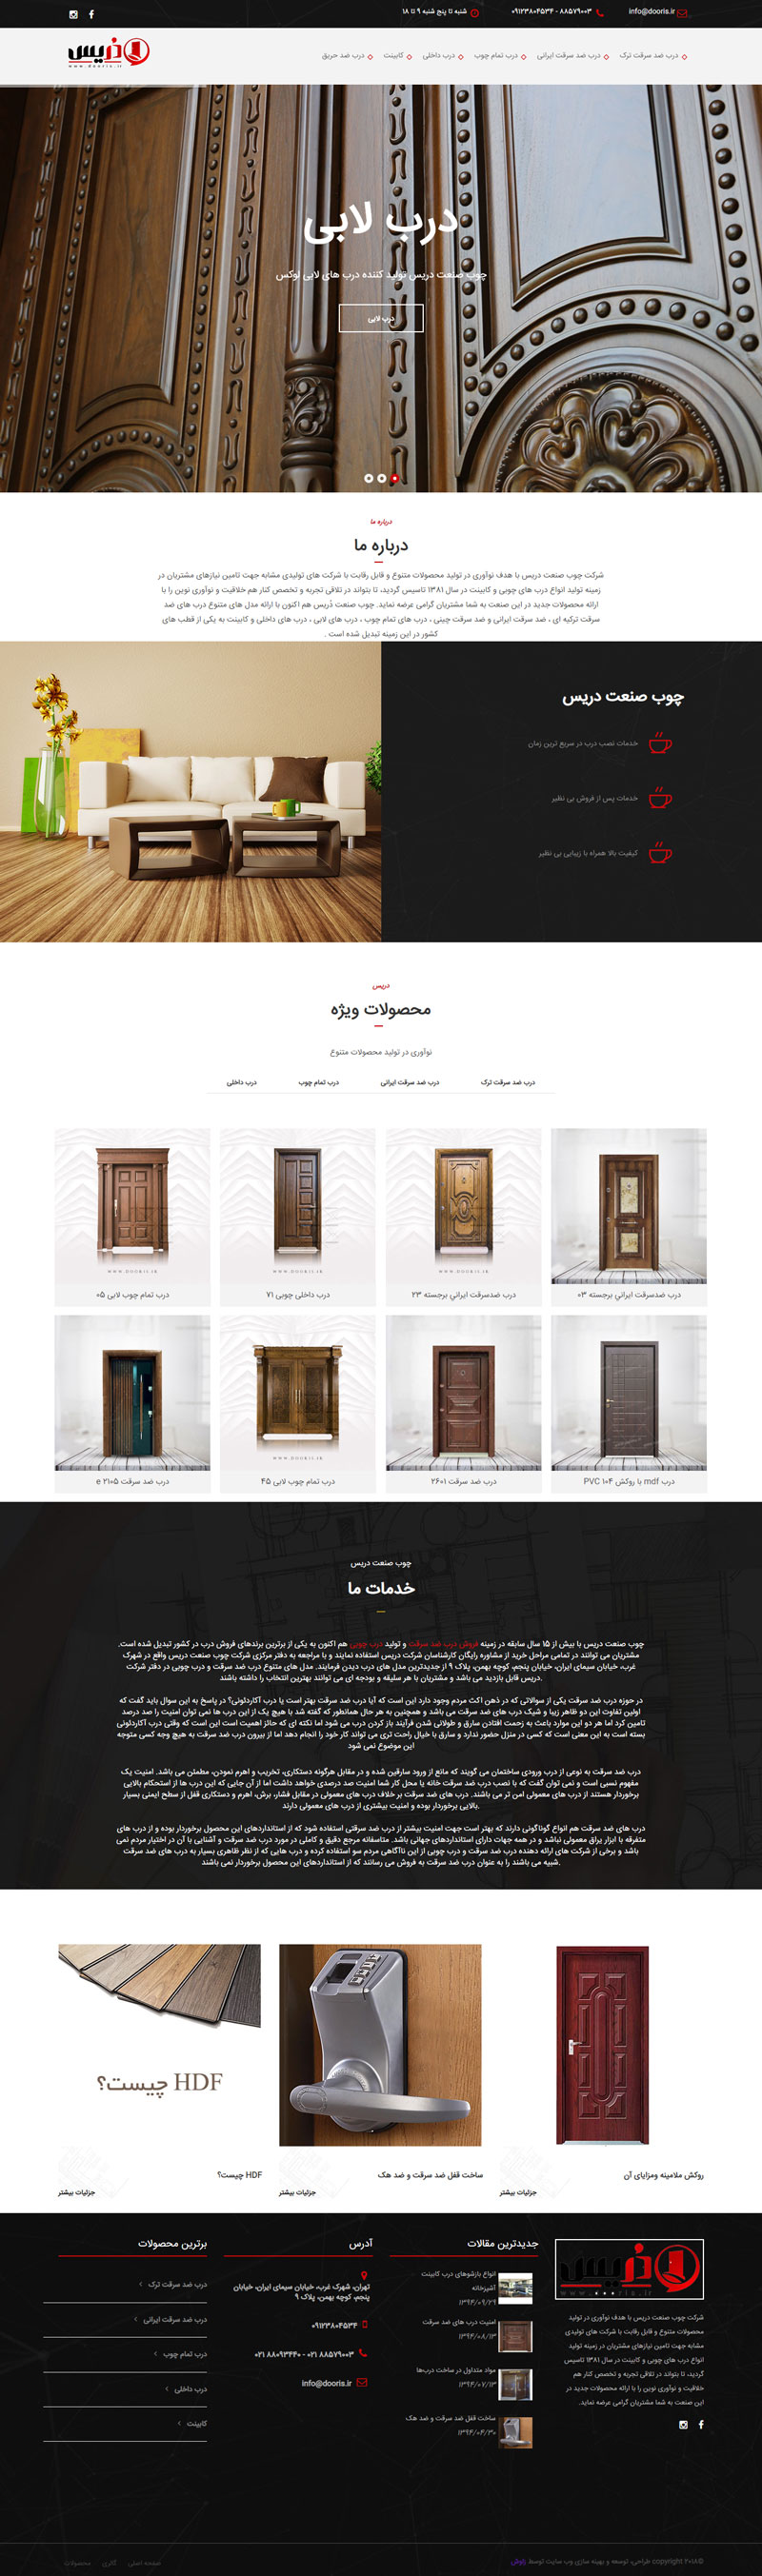 طراحی سایت شرکت چوب صنعت دریس